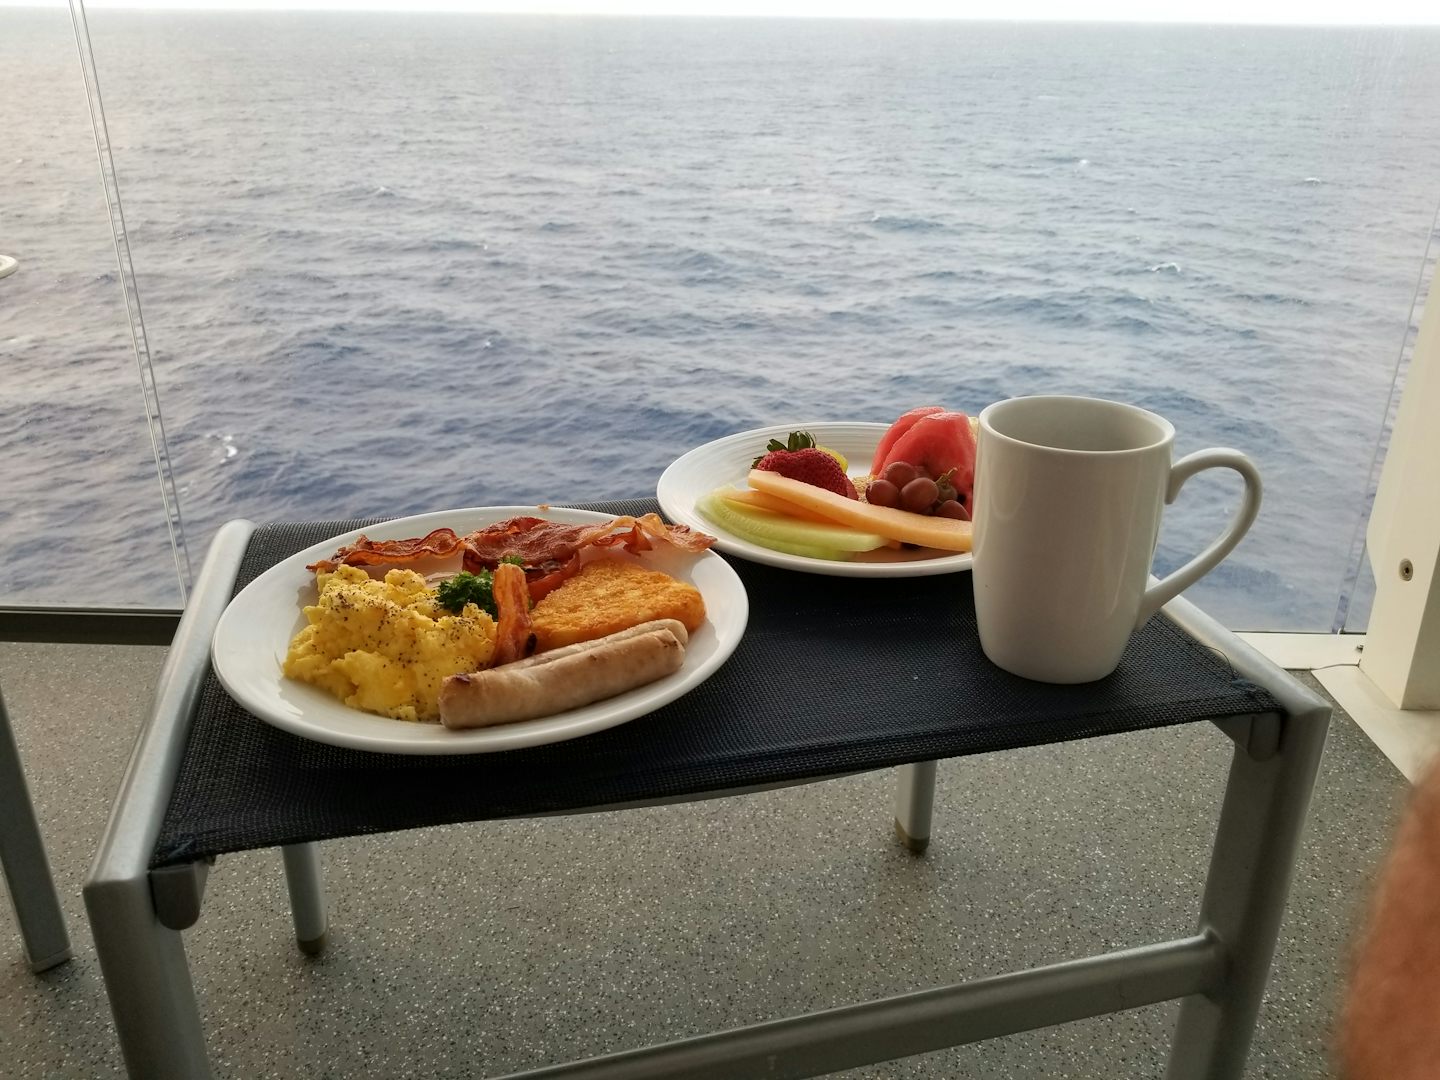 Room Service breakfast on the balcony